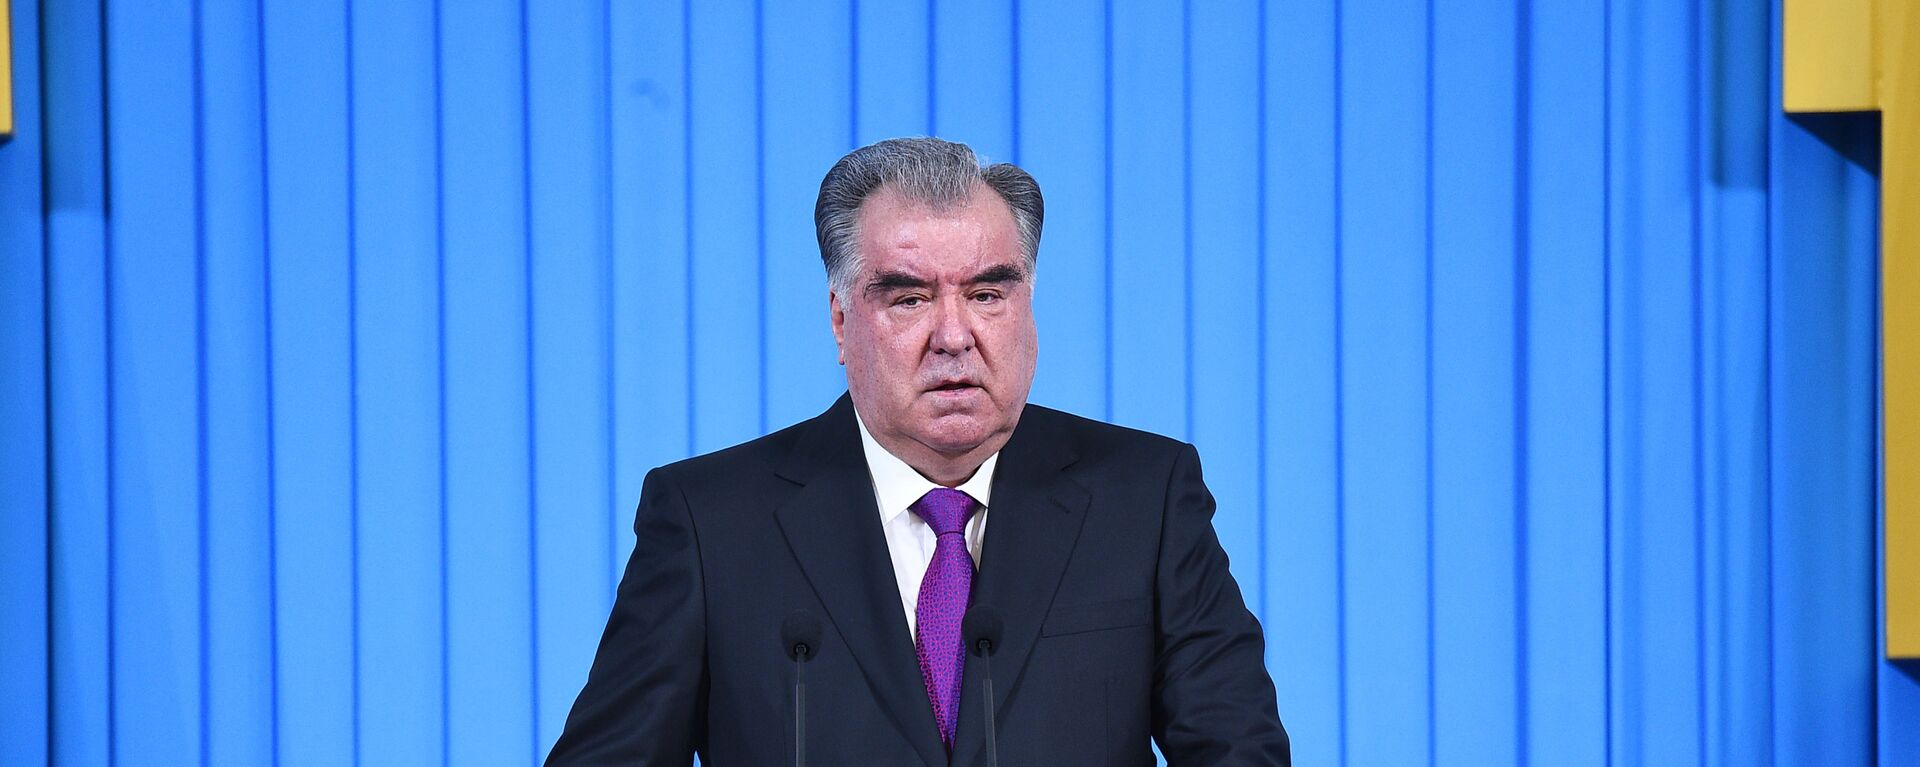 Президент Республики Таджикистан Эмомали Рахмон - Sputnik Таджикистан, 1920, 26.01.2021